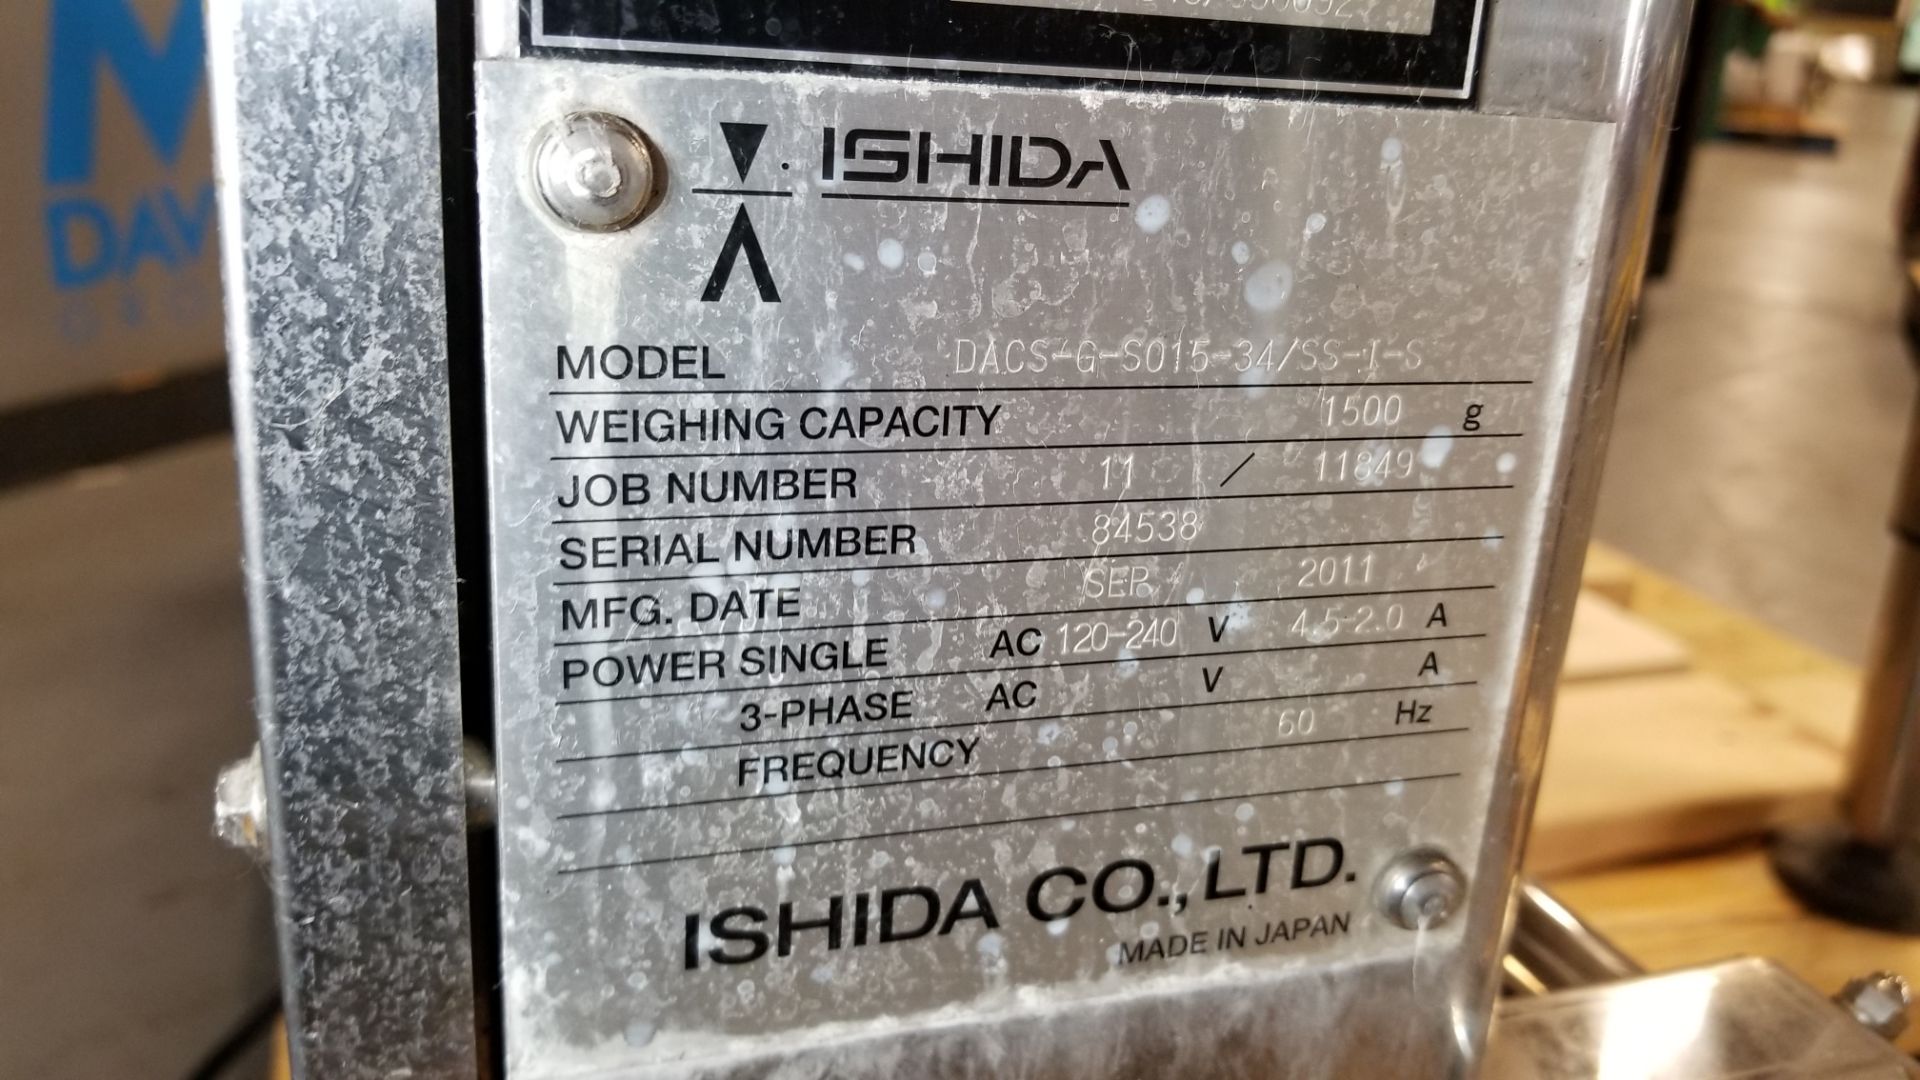 2011 Ishida S/S Digital Checkweigher, Model DACS-G-S015-34/SS-1-S, SN 84538, 1,500 Gram Capacity, - Image 6 of 6